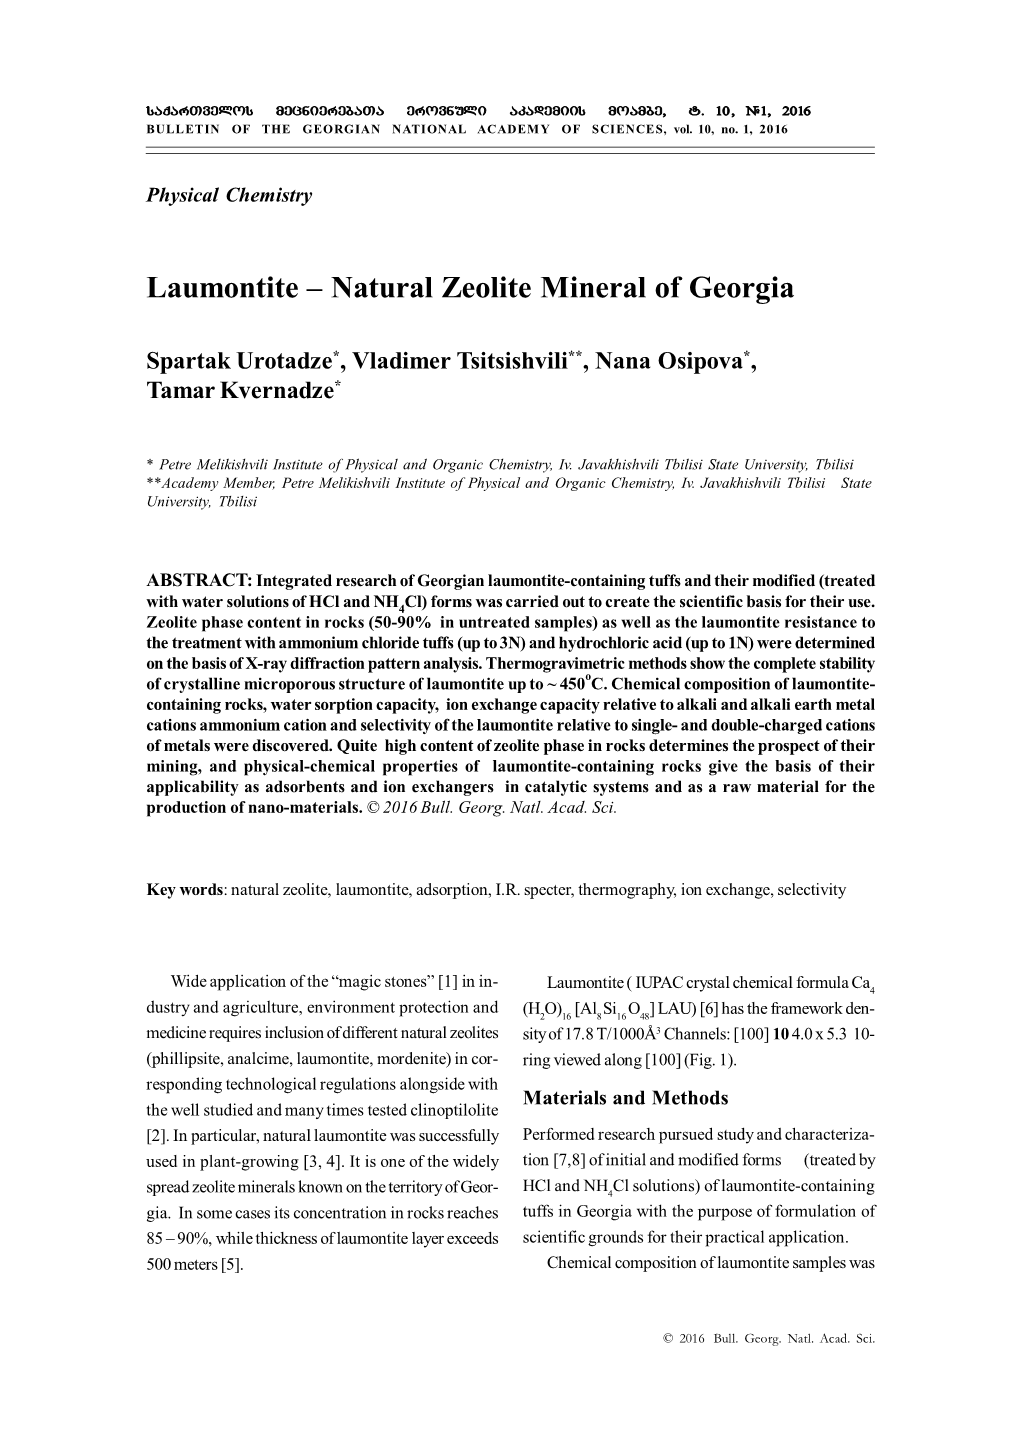 Laumontite – Natural Zeolite Mineral of Georgia